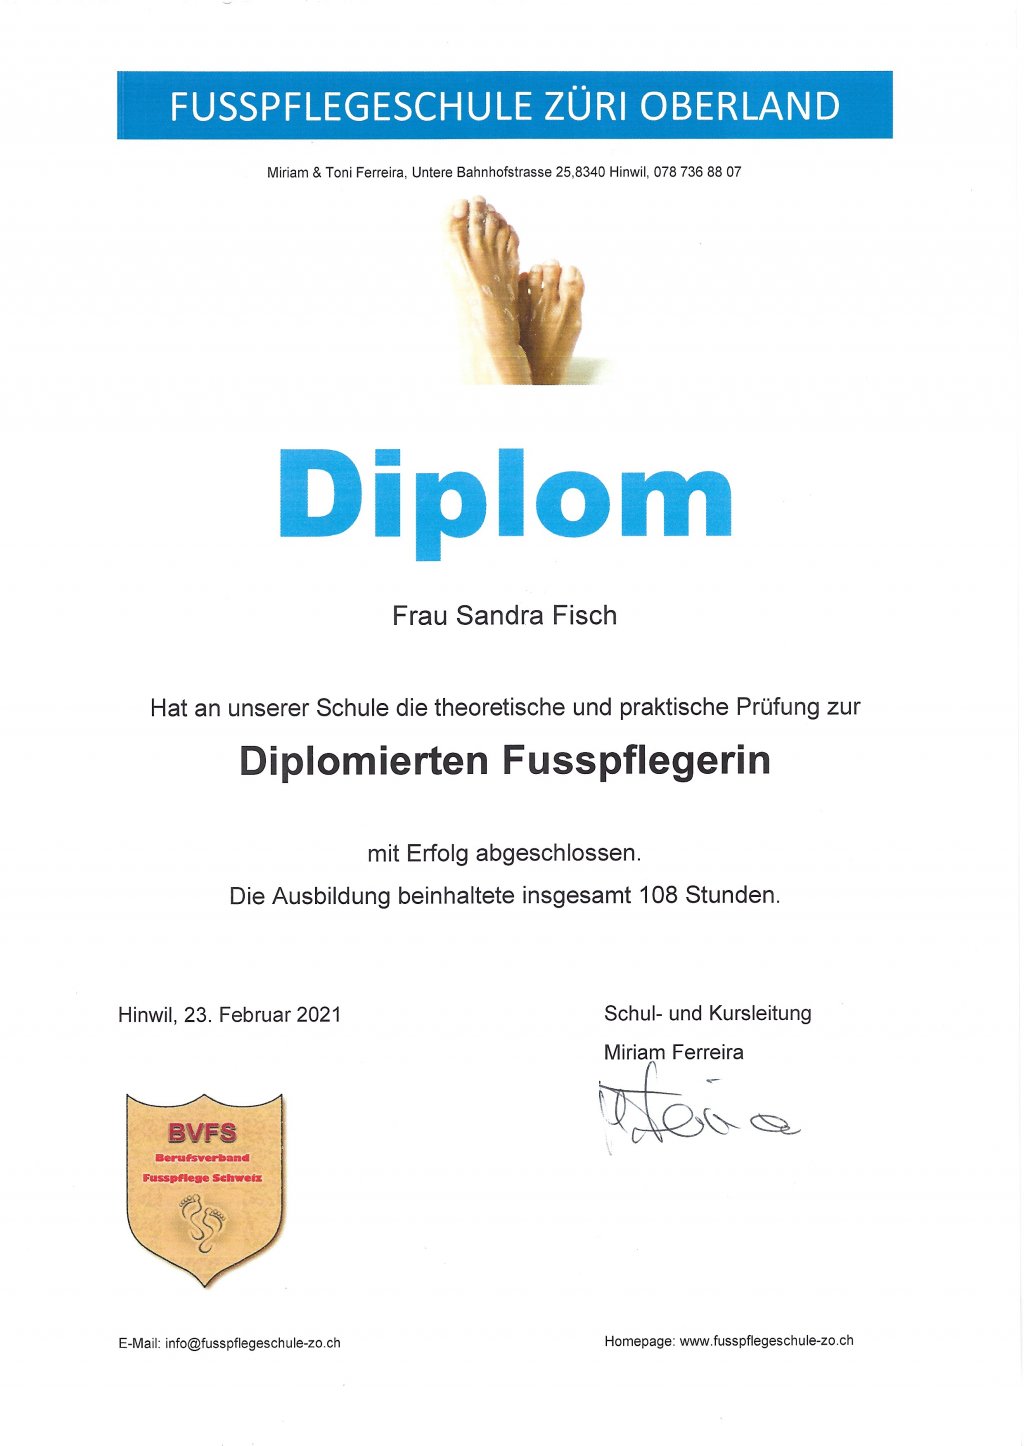 image-11103263-2021_-_Diplom_Fusspflege-16790.w640.jpg